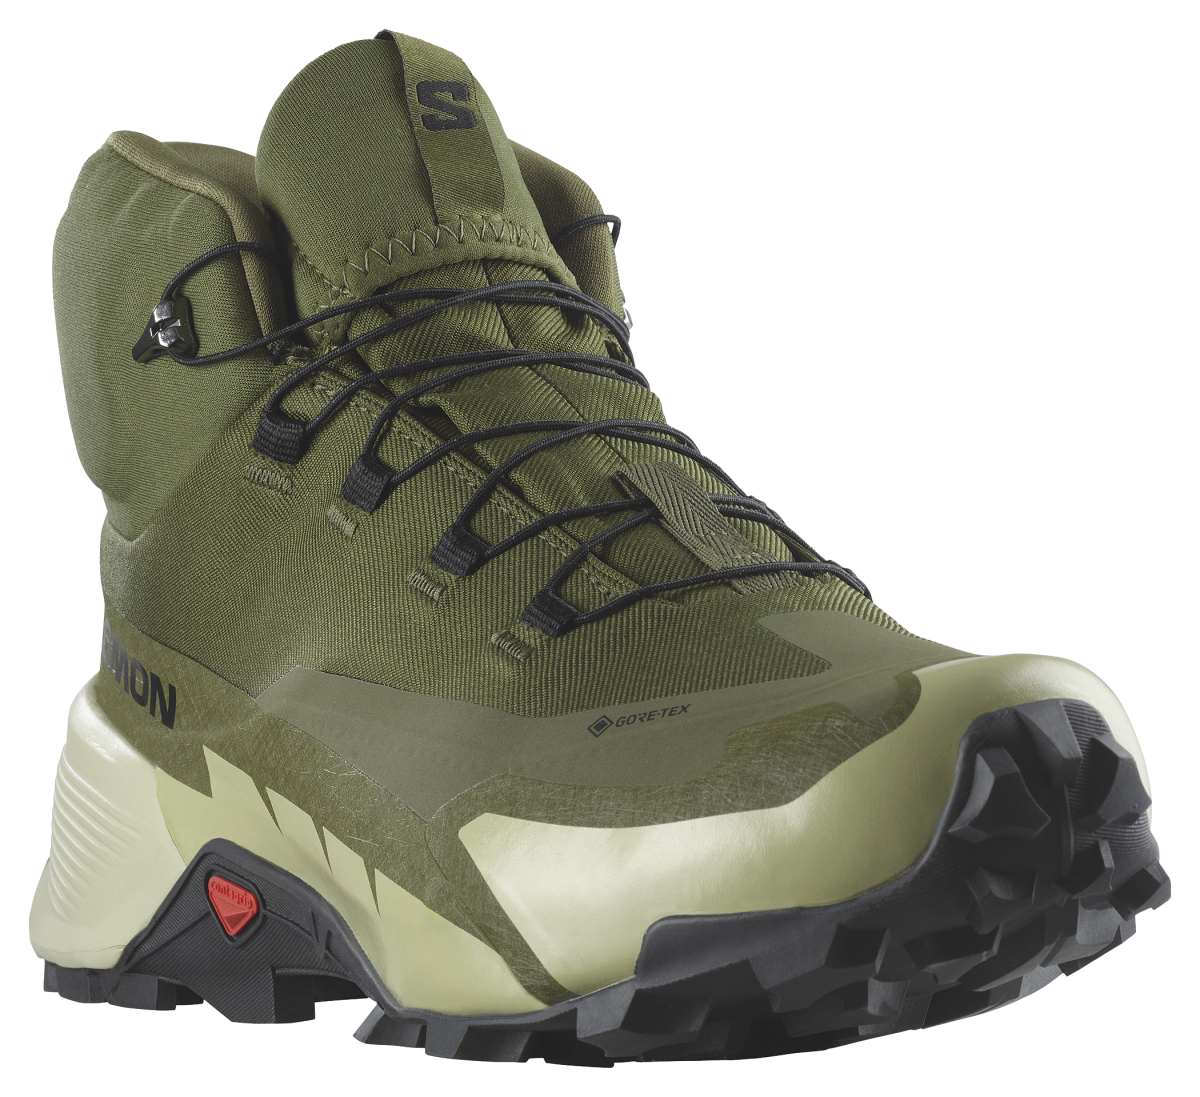 Salomon Cross Hike 2 Mid GORE-TEX Hiking Boots for Men - Olive/Moss Black - 8.5M